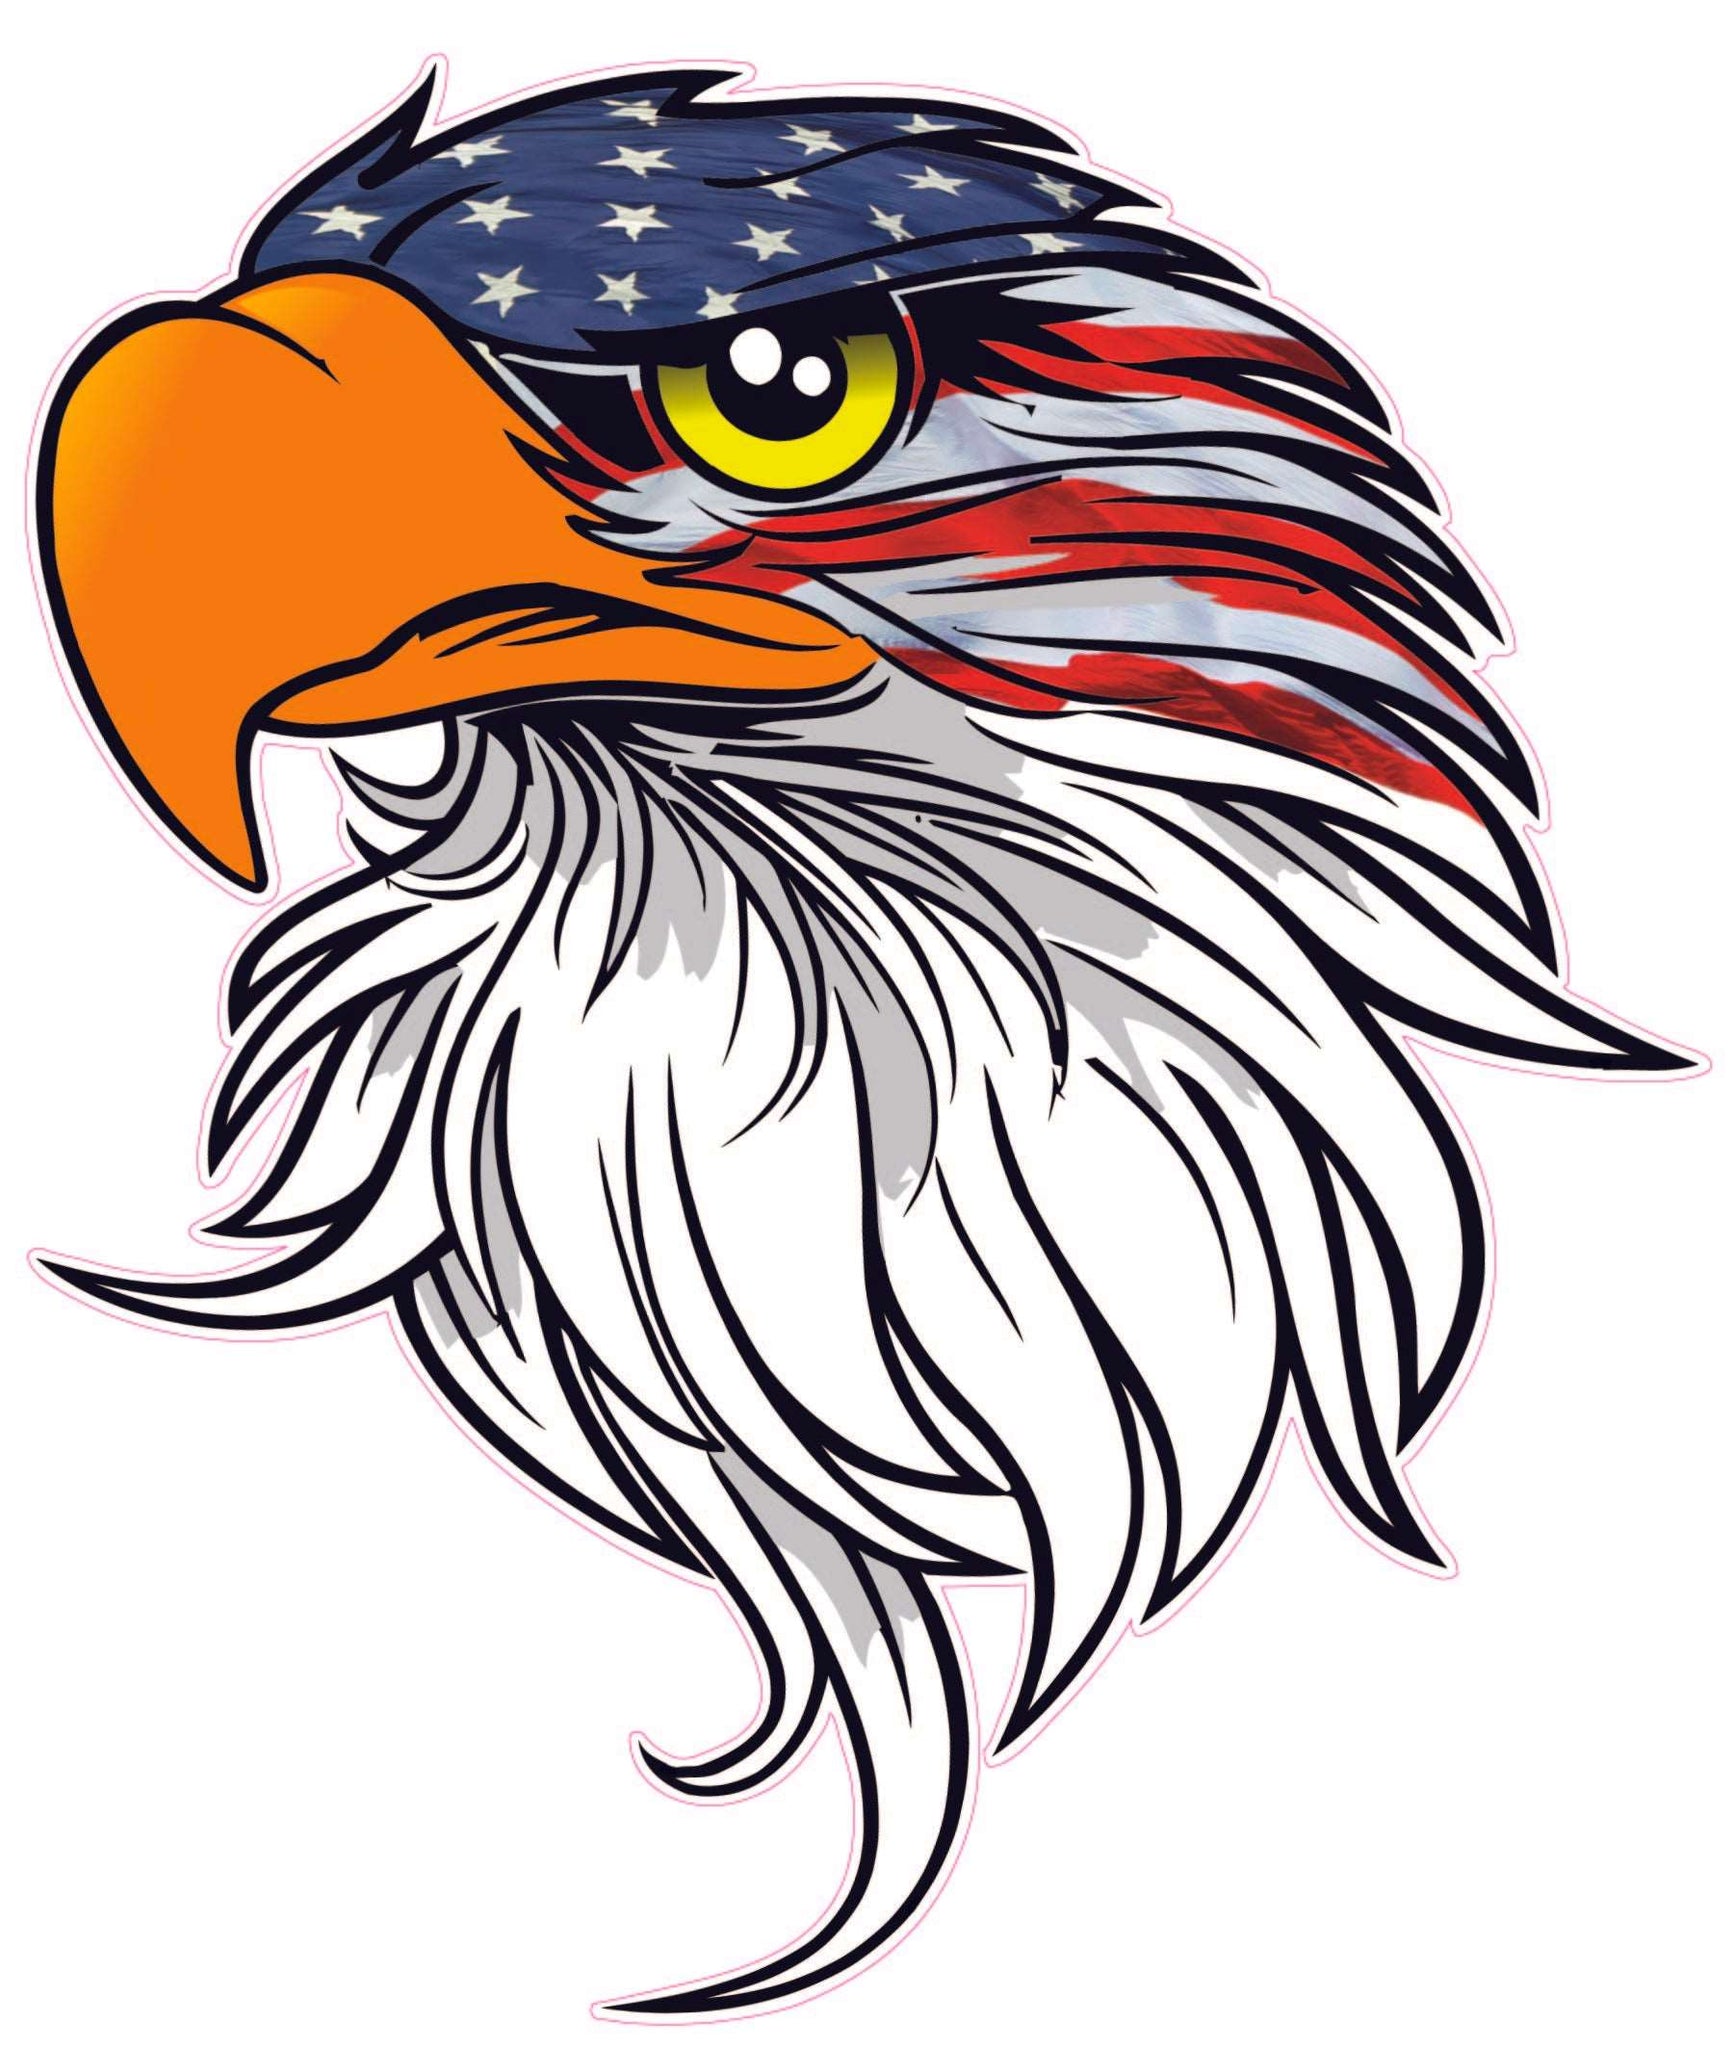 Eagle head American flag v4 Decal  Nostalgia Decals Die Cut Vinyl Stickers  – Nostalgia Decals Online